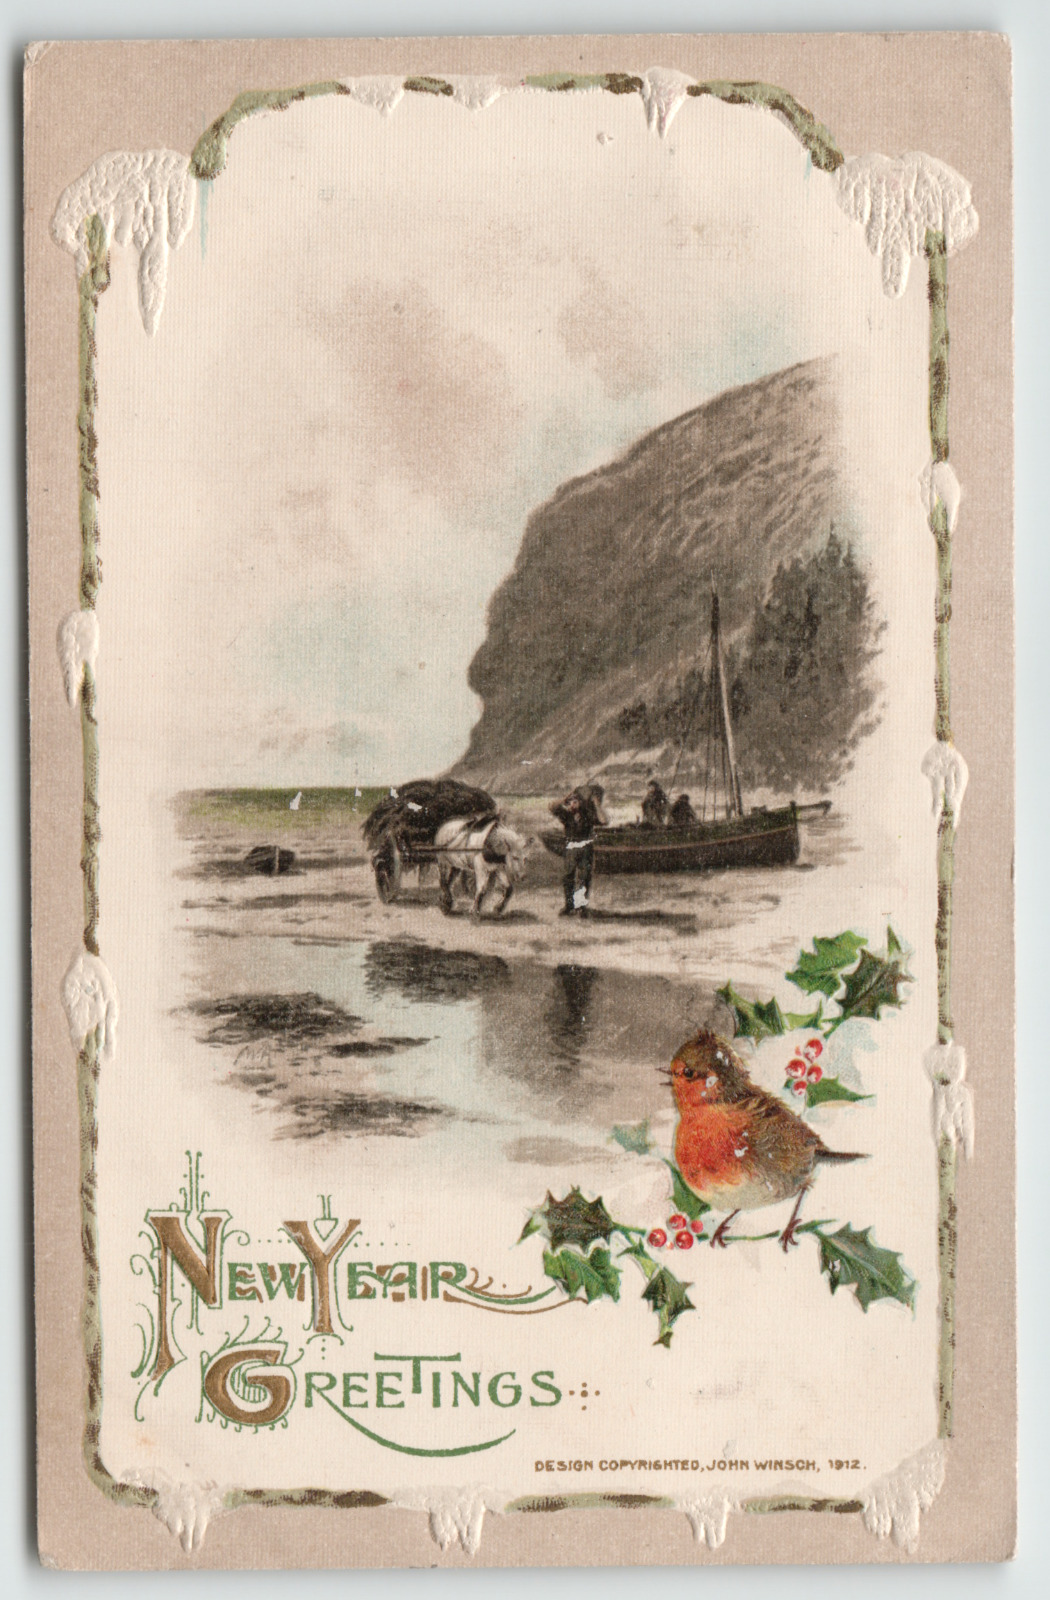 Postcard 1912 John Winsch New Year Greetings Embossed